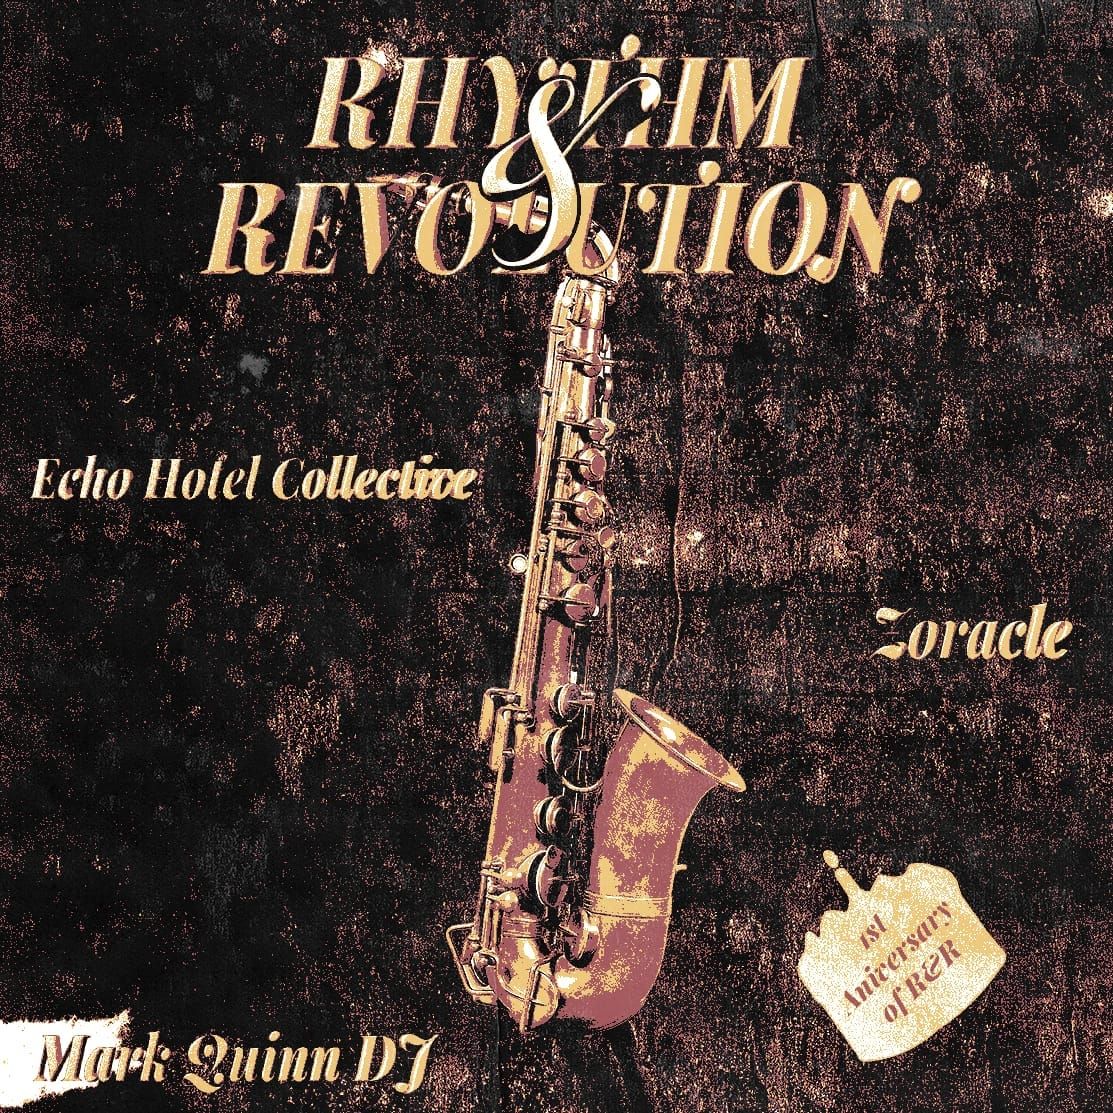 Rhythm & Revolution (1st anniversary!)